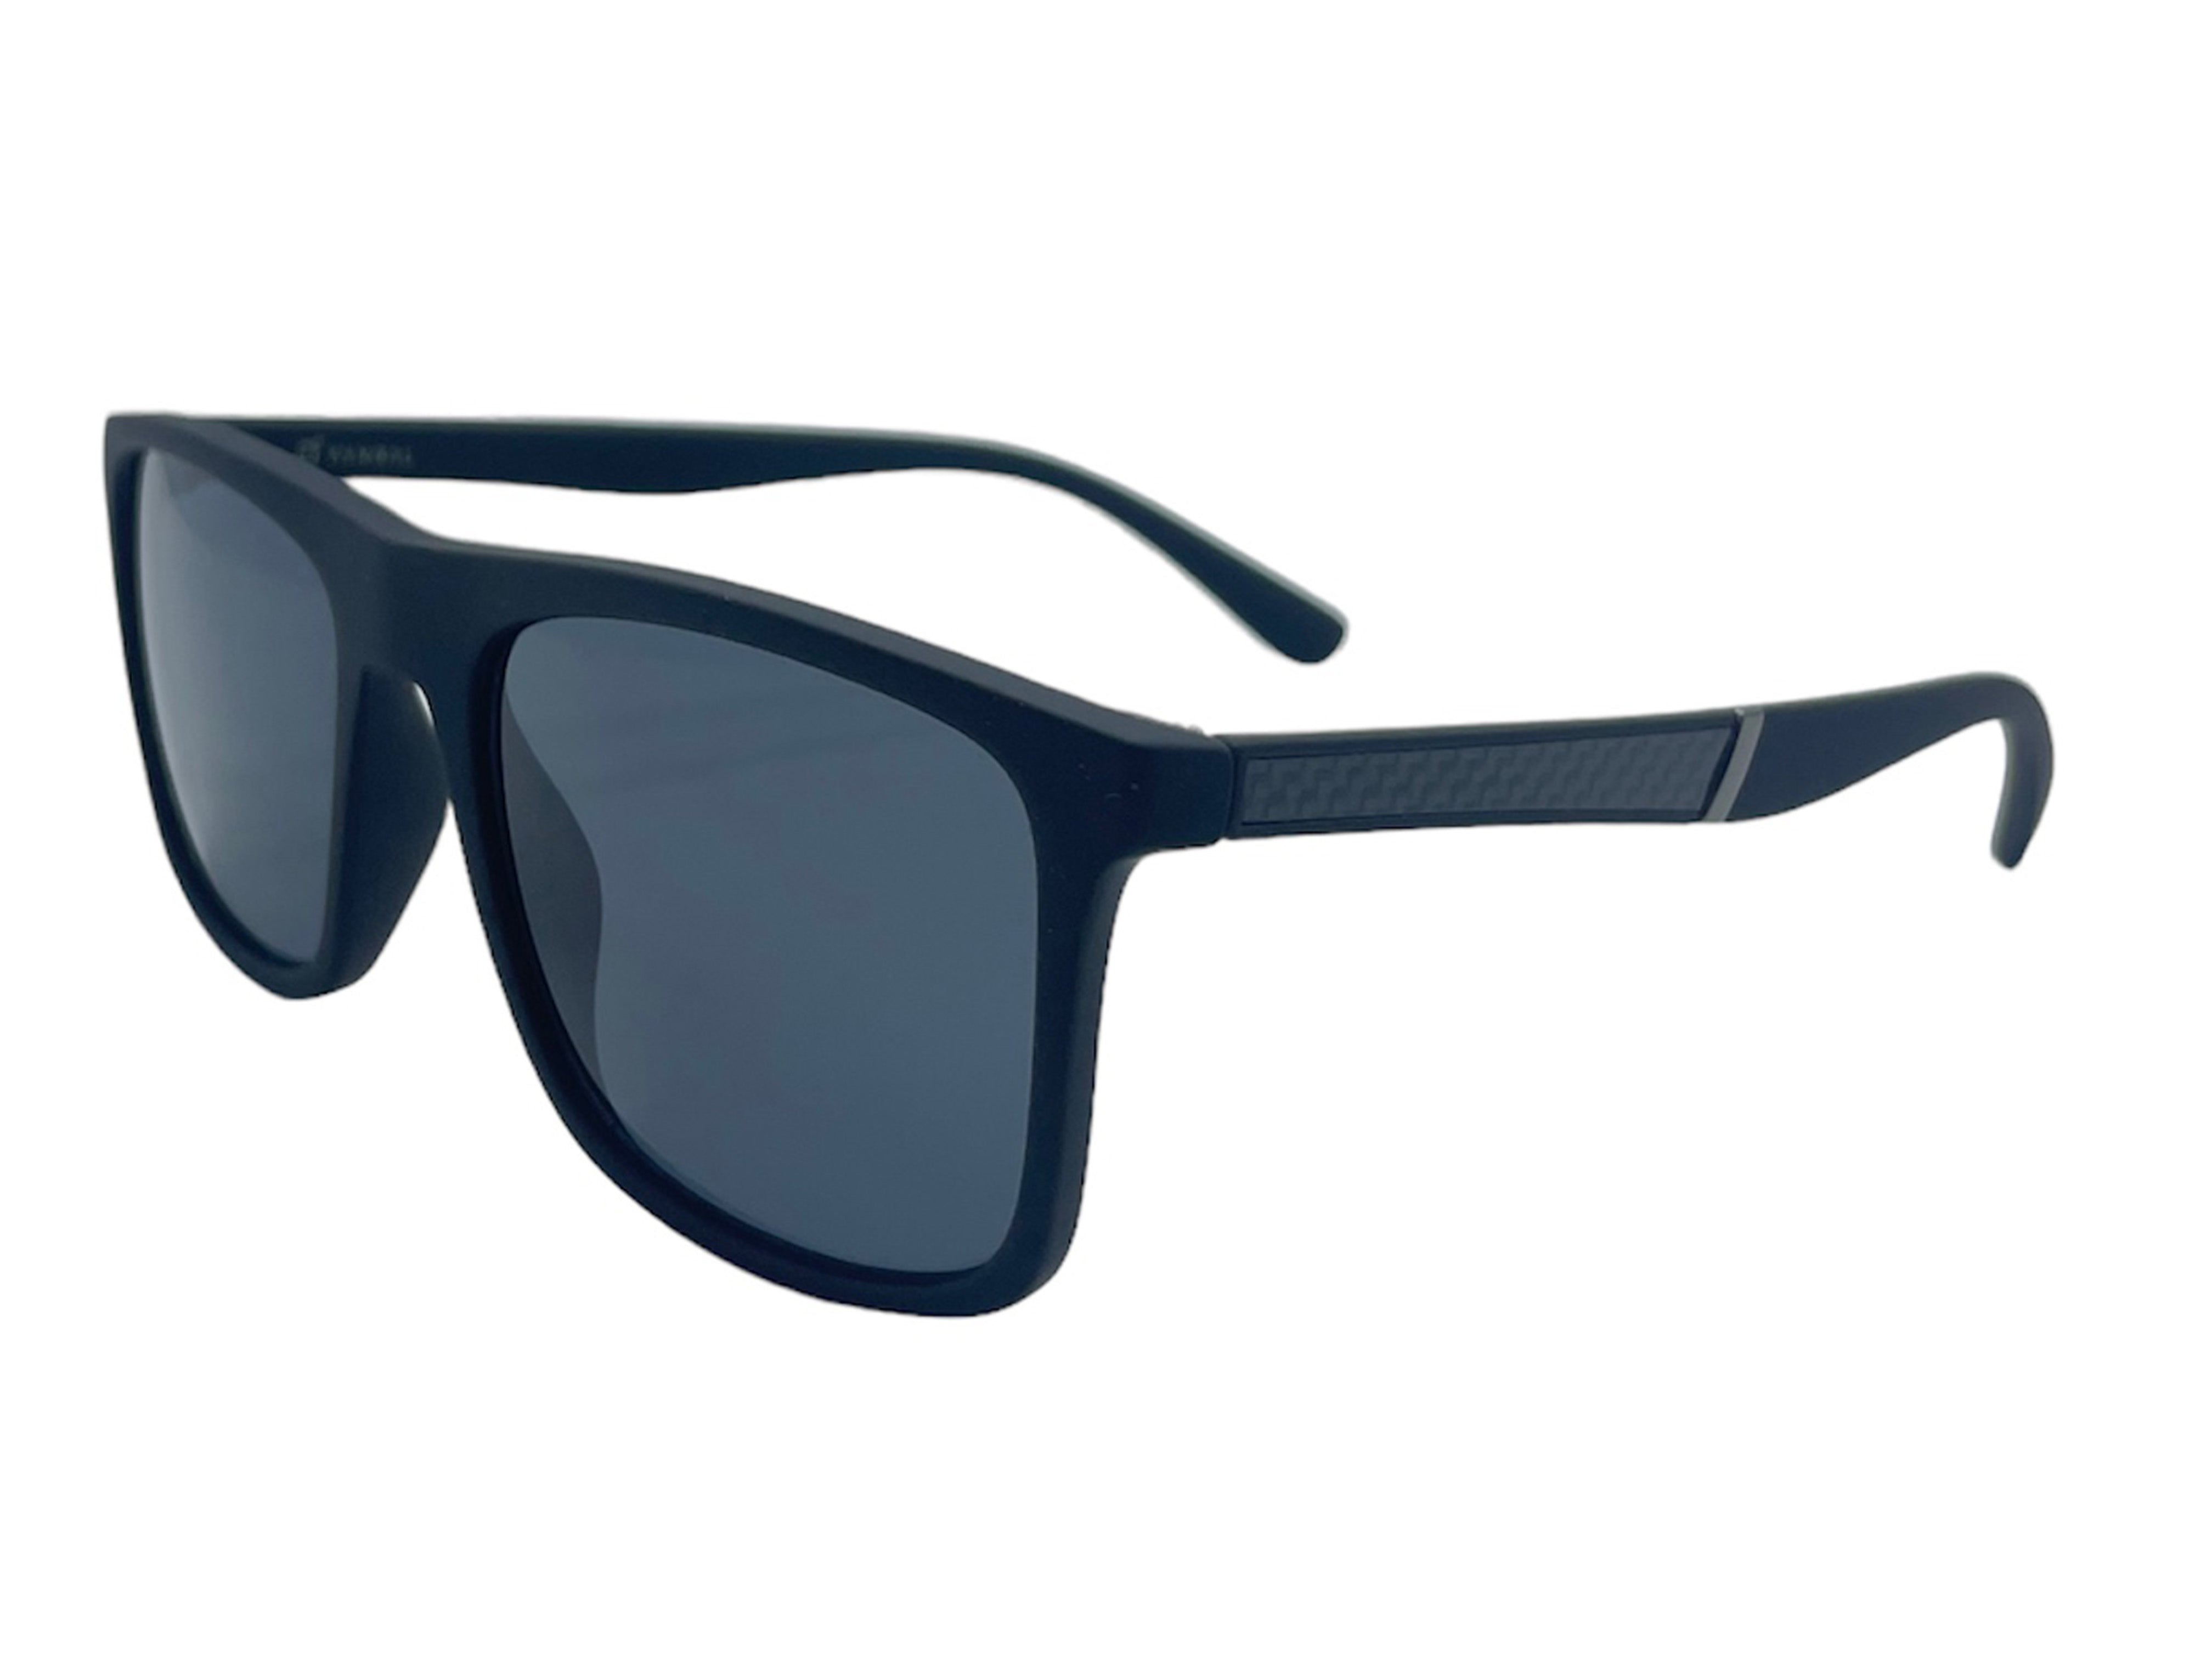 NS Deluxe - 400 - Black - Sunglasses